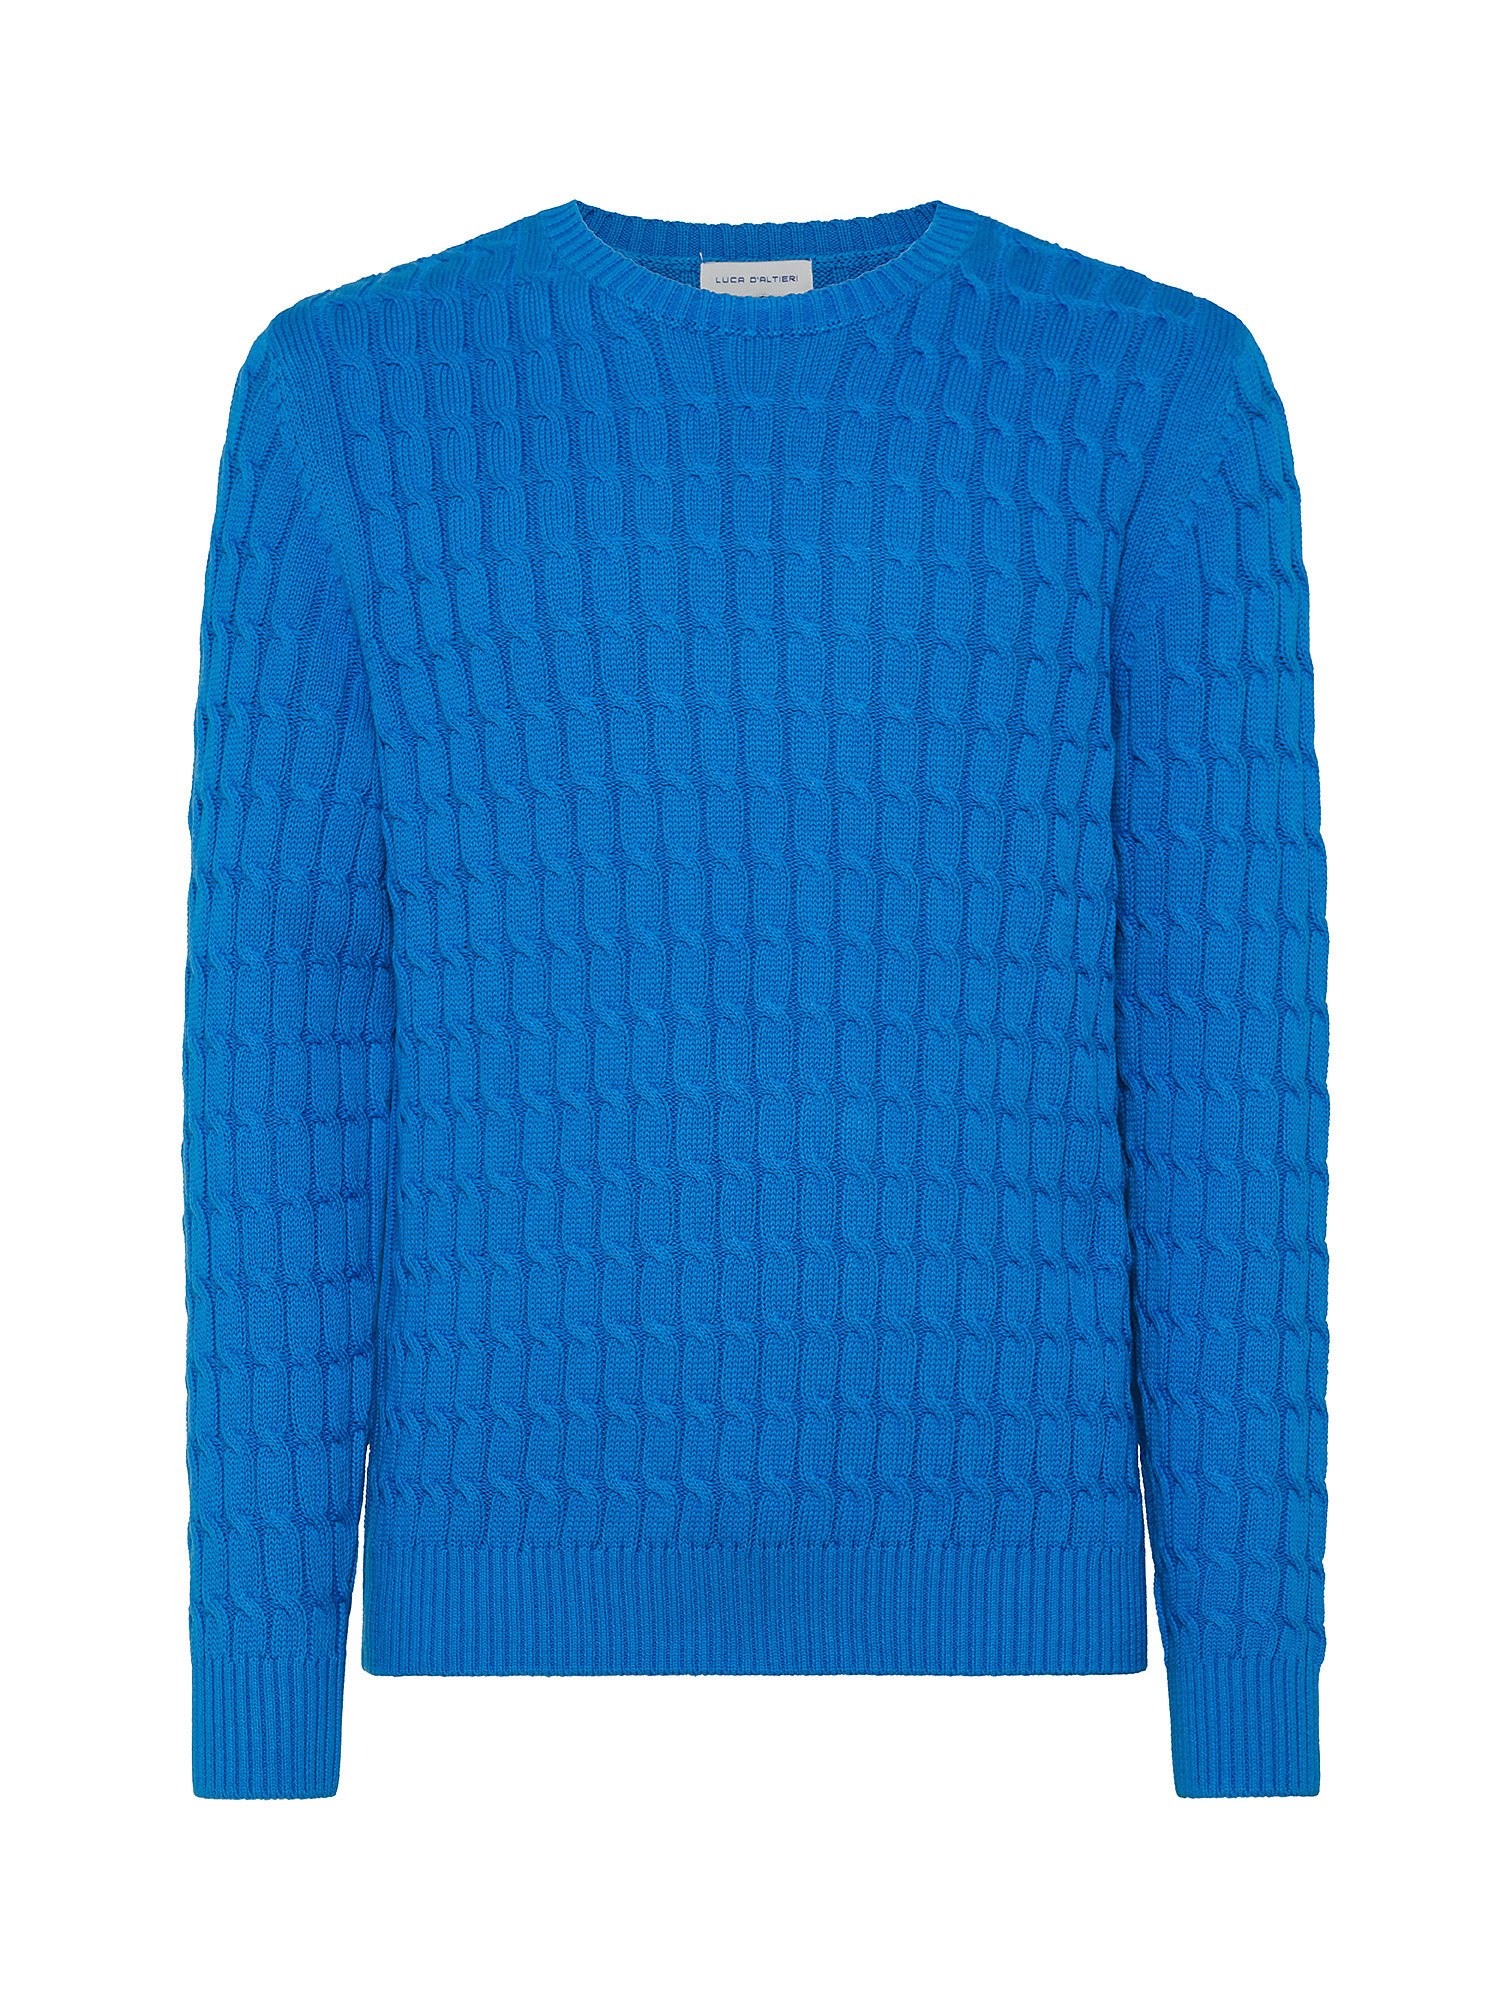 Luca D'Altieri - Crewneck sweater with pure cotton braids, Blue Cornflower, large image number 0